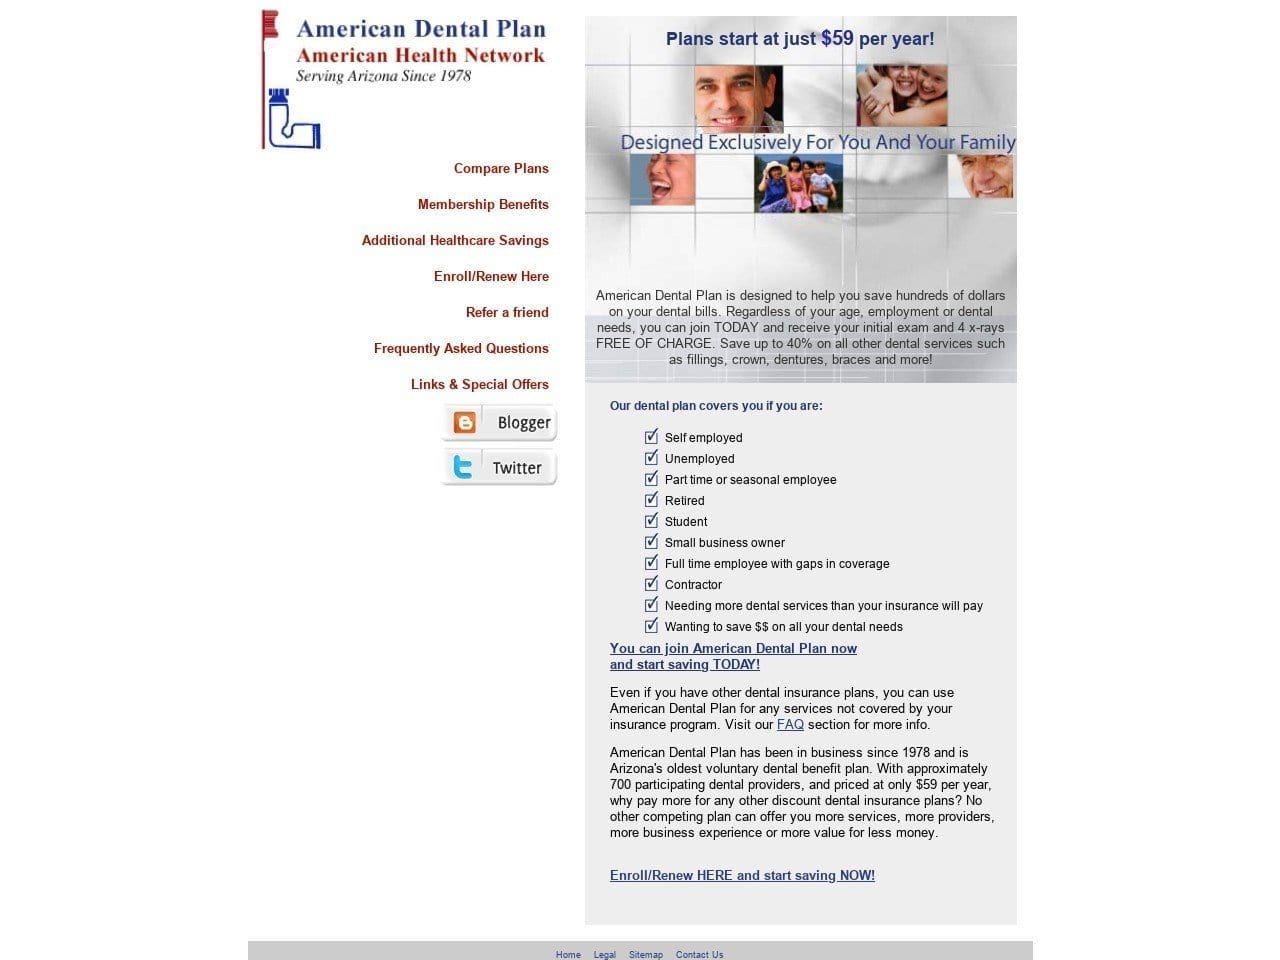 American Dental Plan Website Screenshot from arizdental.com